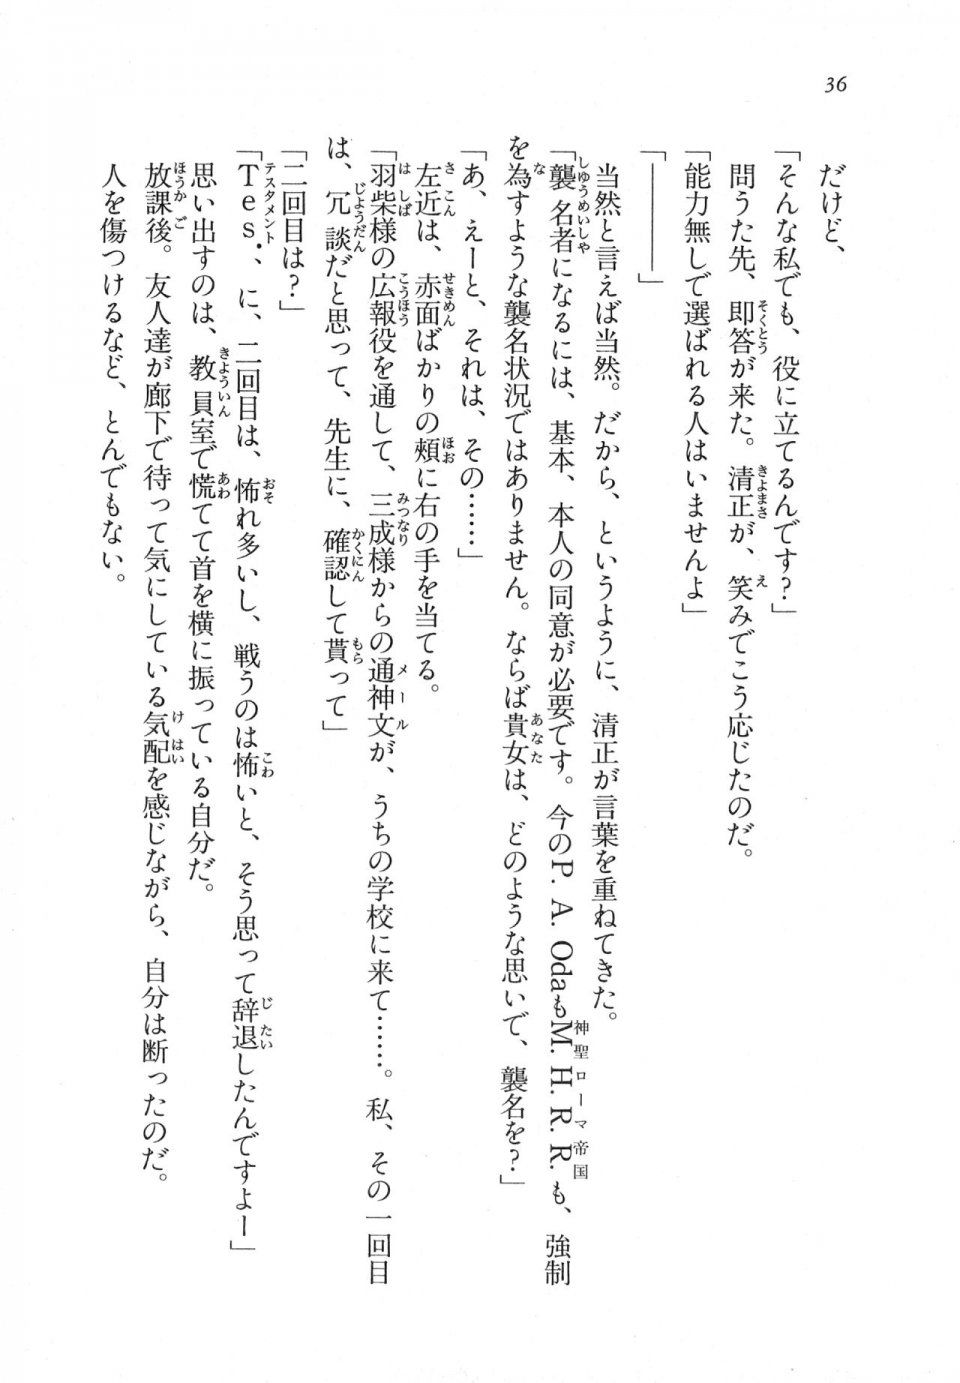 Kyoukai Senjou no Horizon LN Vol 18(7C) Part 1 - Photo #36